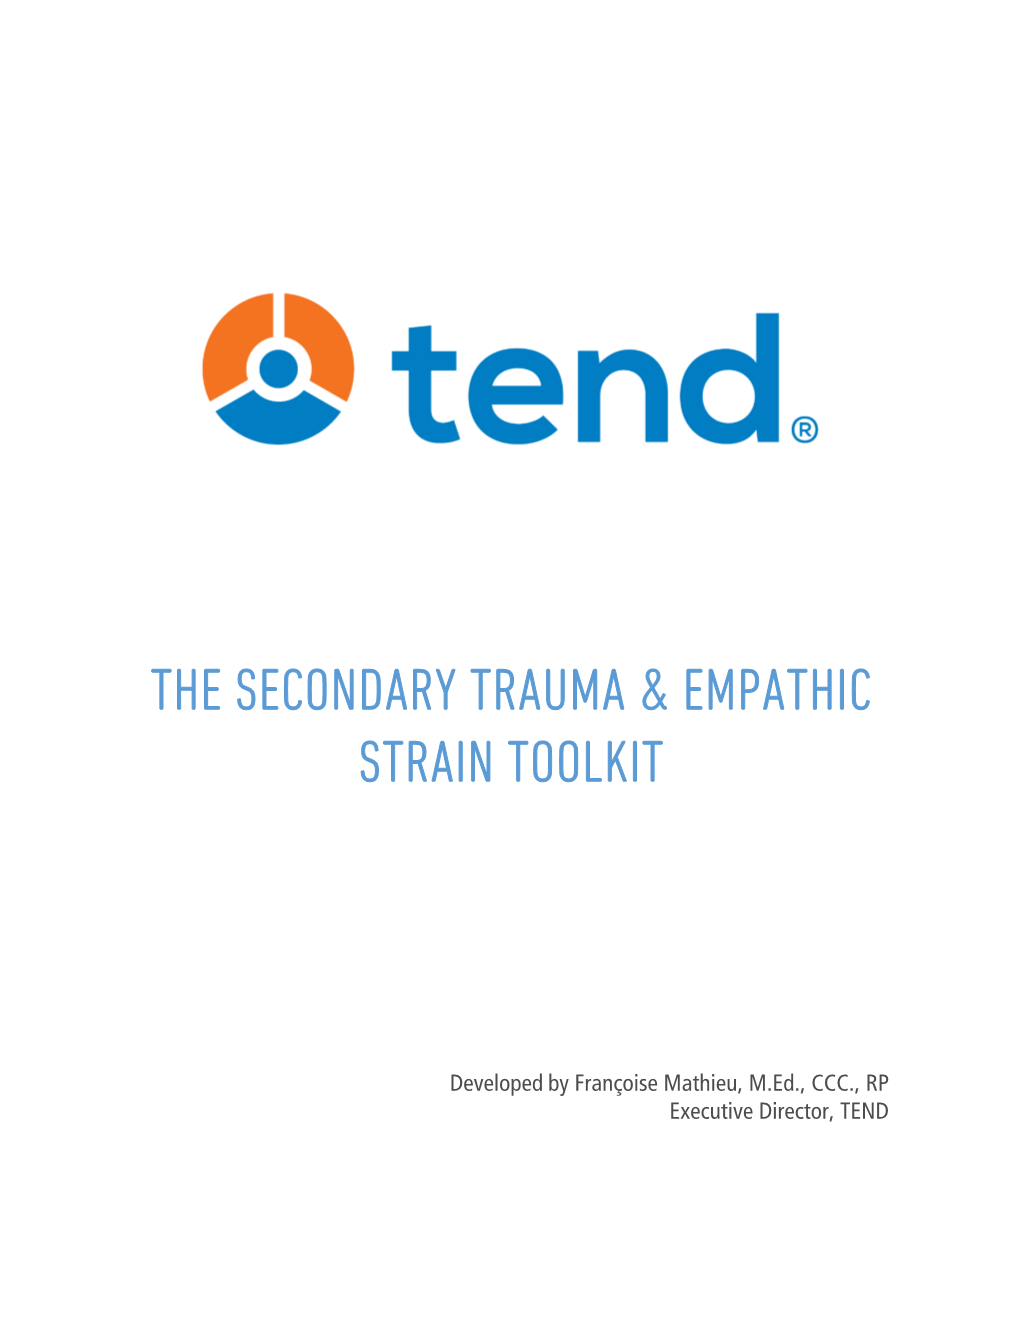 The Secondary Trauma & Empathic Strain Toolkit